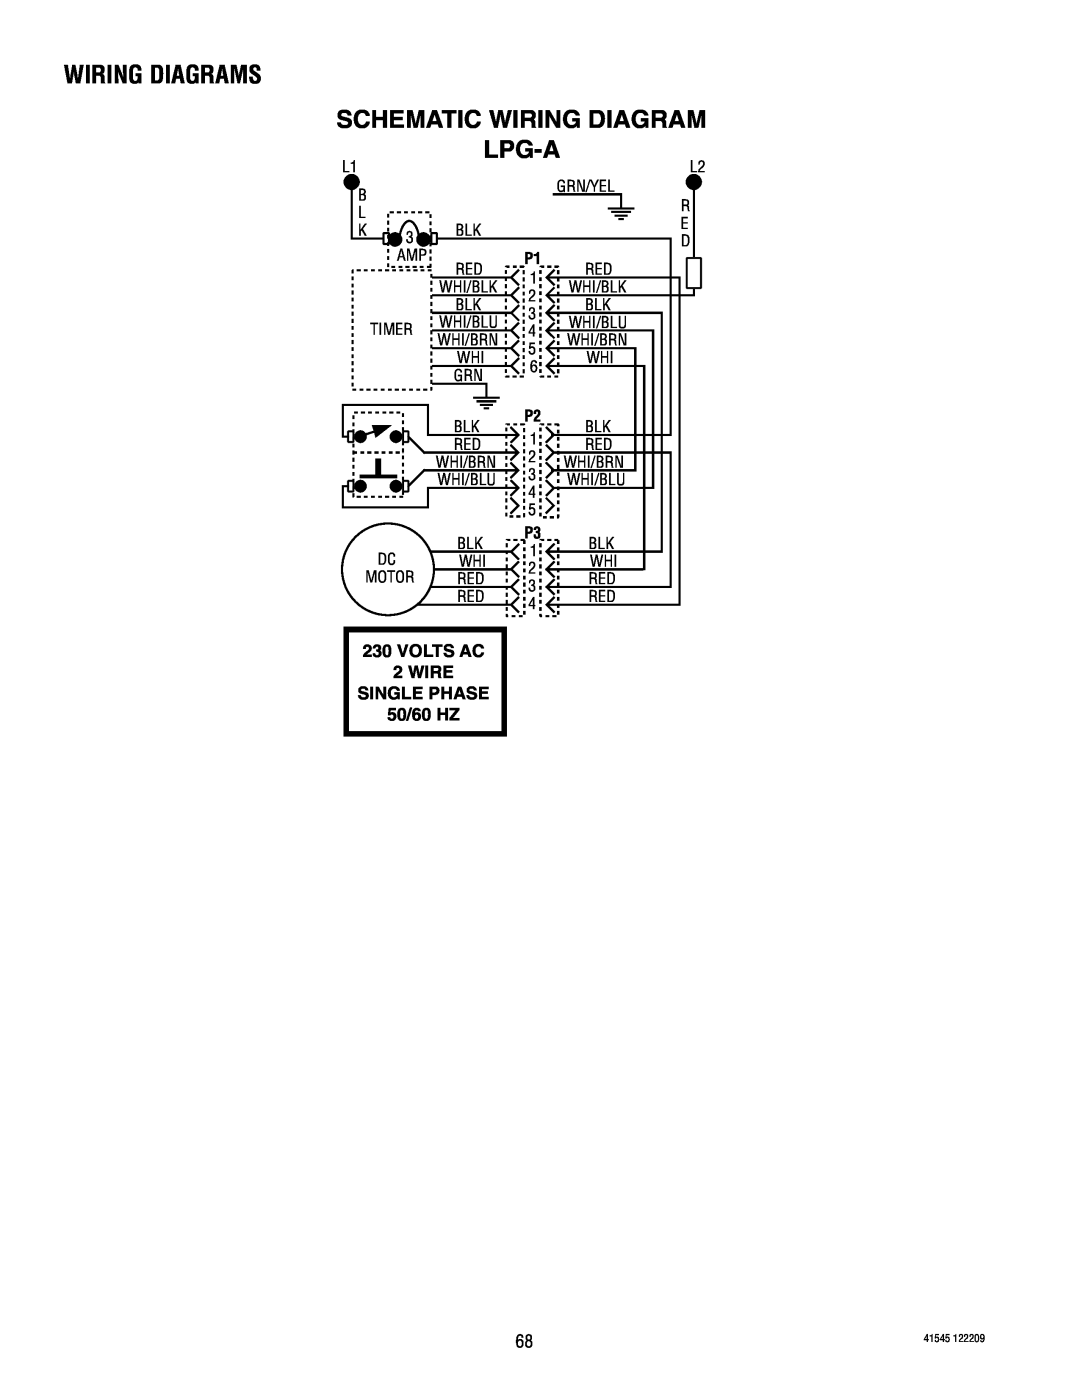 Bunn G9-2T DBC, LPG-2, G9WD, FPG, G1 Wiring Diagrams Schematic Wiring Diagram, Lpg-A, VOLTS AC 2 WIRE SINGLE PHASE 50/60 HZ 